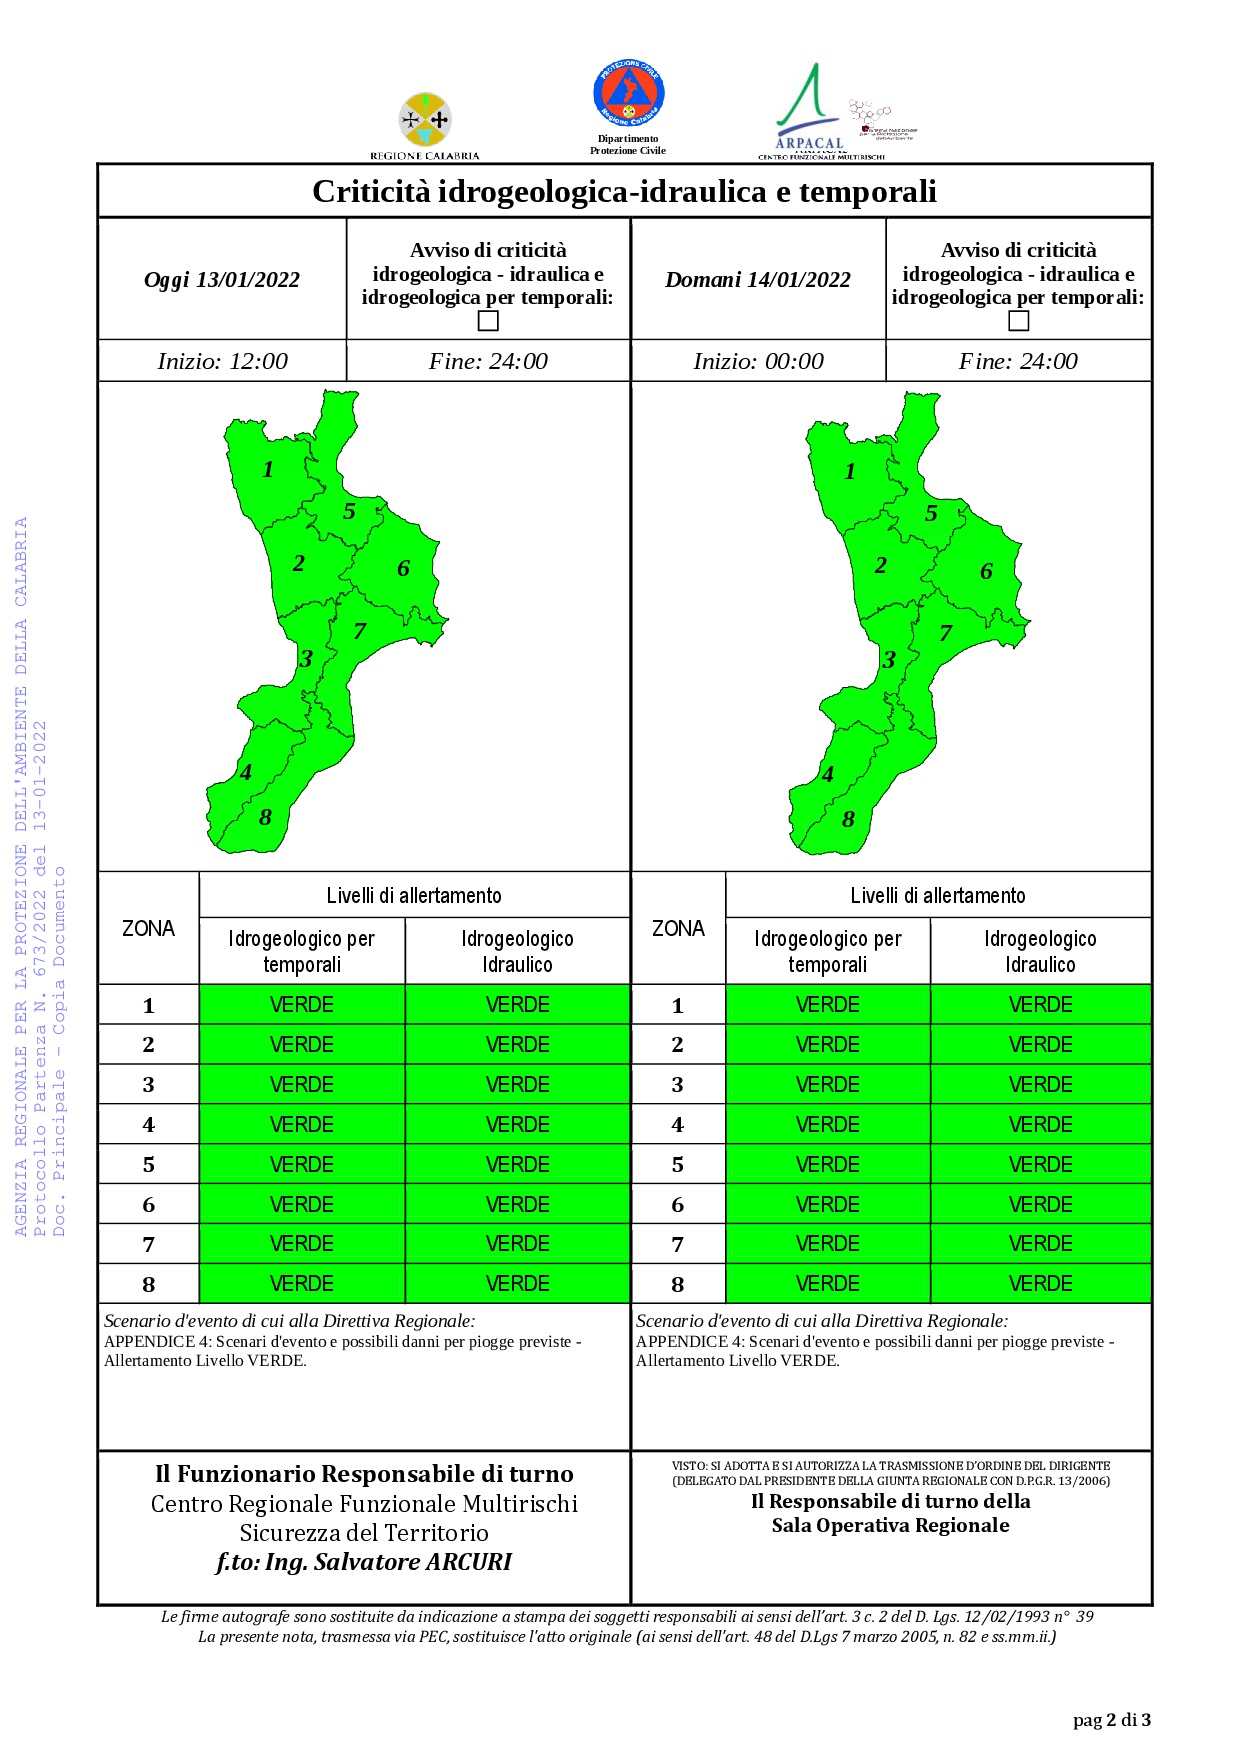 Criticità idrogeologica-idraulica e temporali in Calabria 13-01-2022